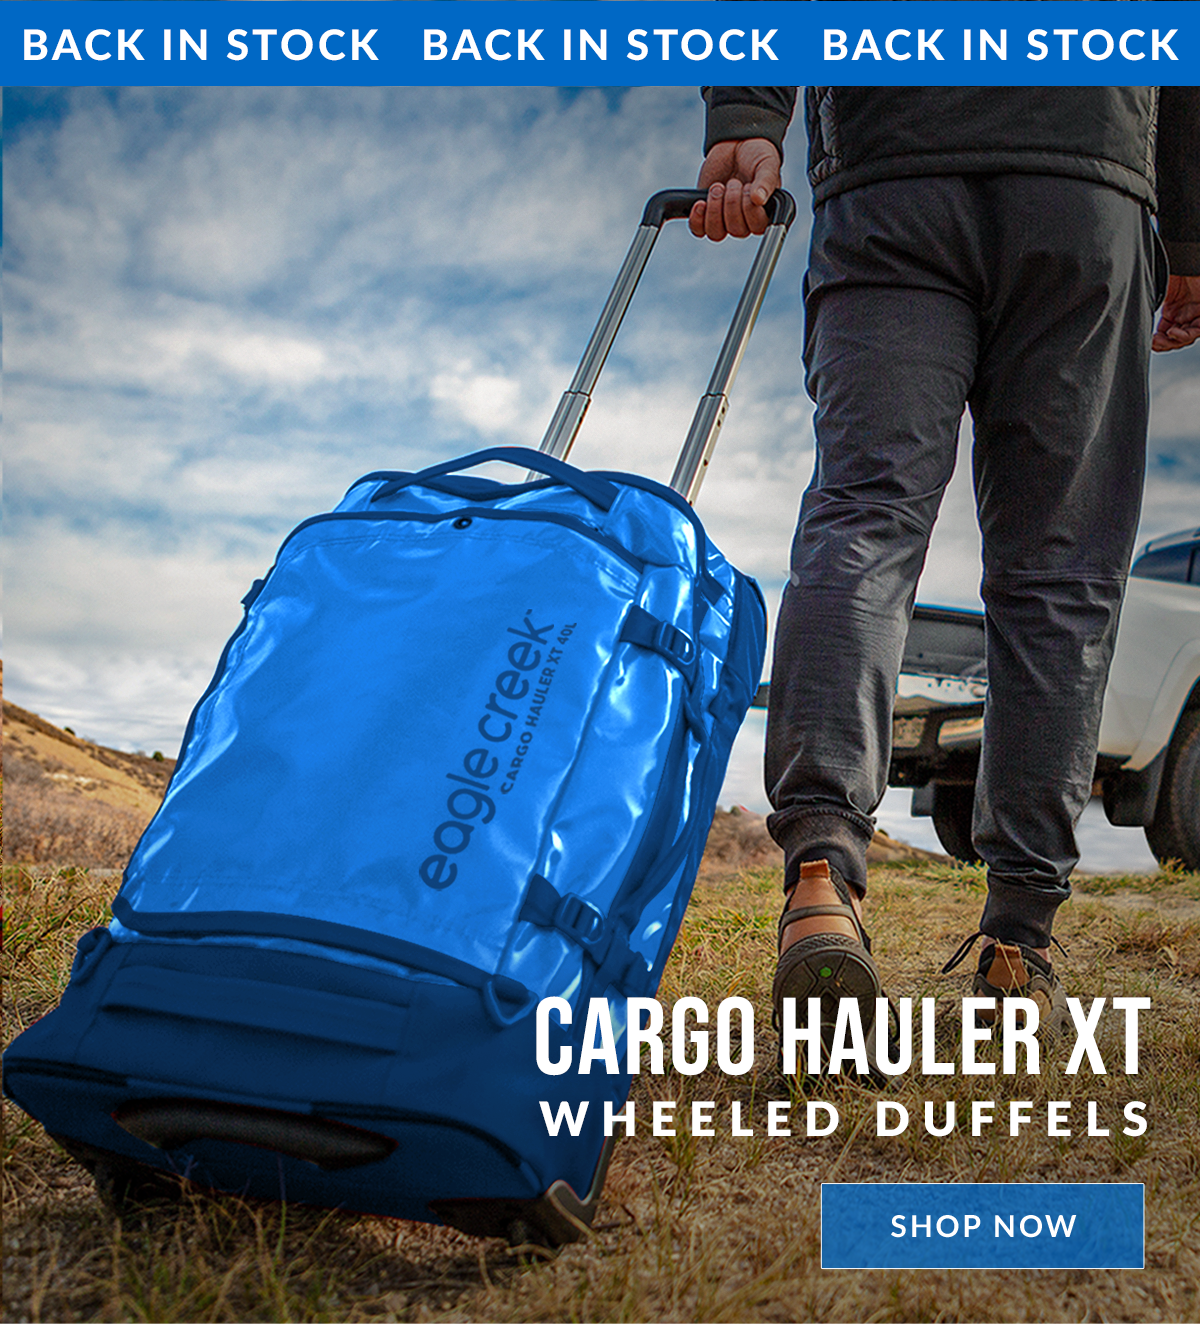 Cargo Hauler XT - Back In Stock - Shop Now